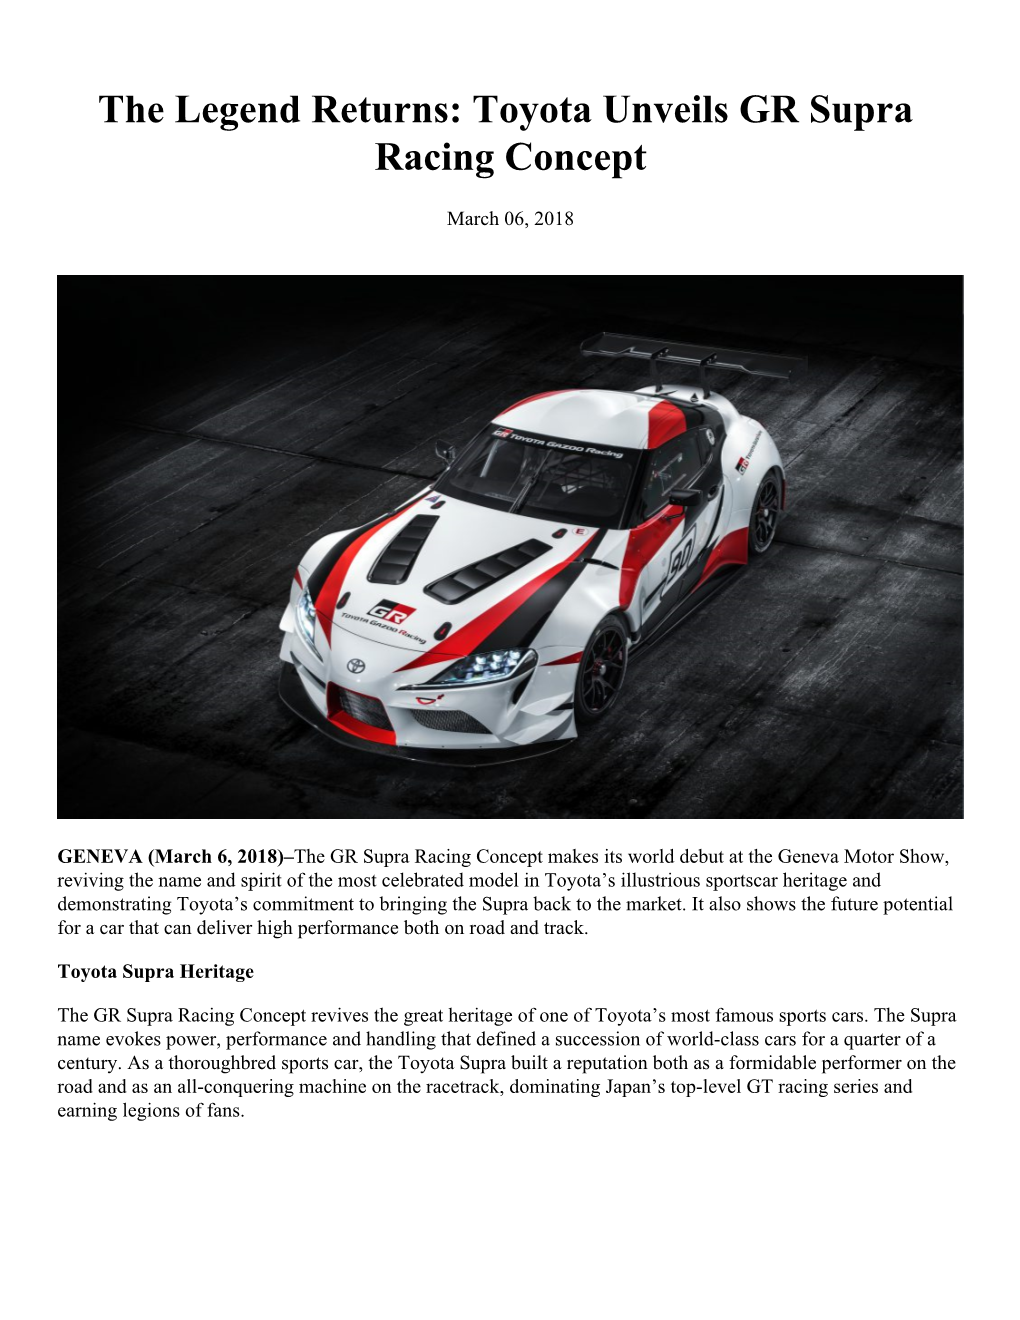 The Legend Returns: Toyota Unveils GR Supra Racing Concept